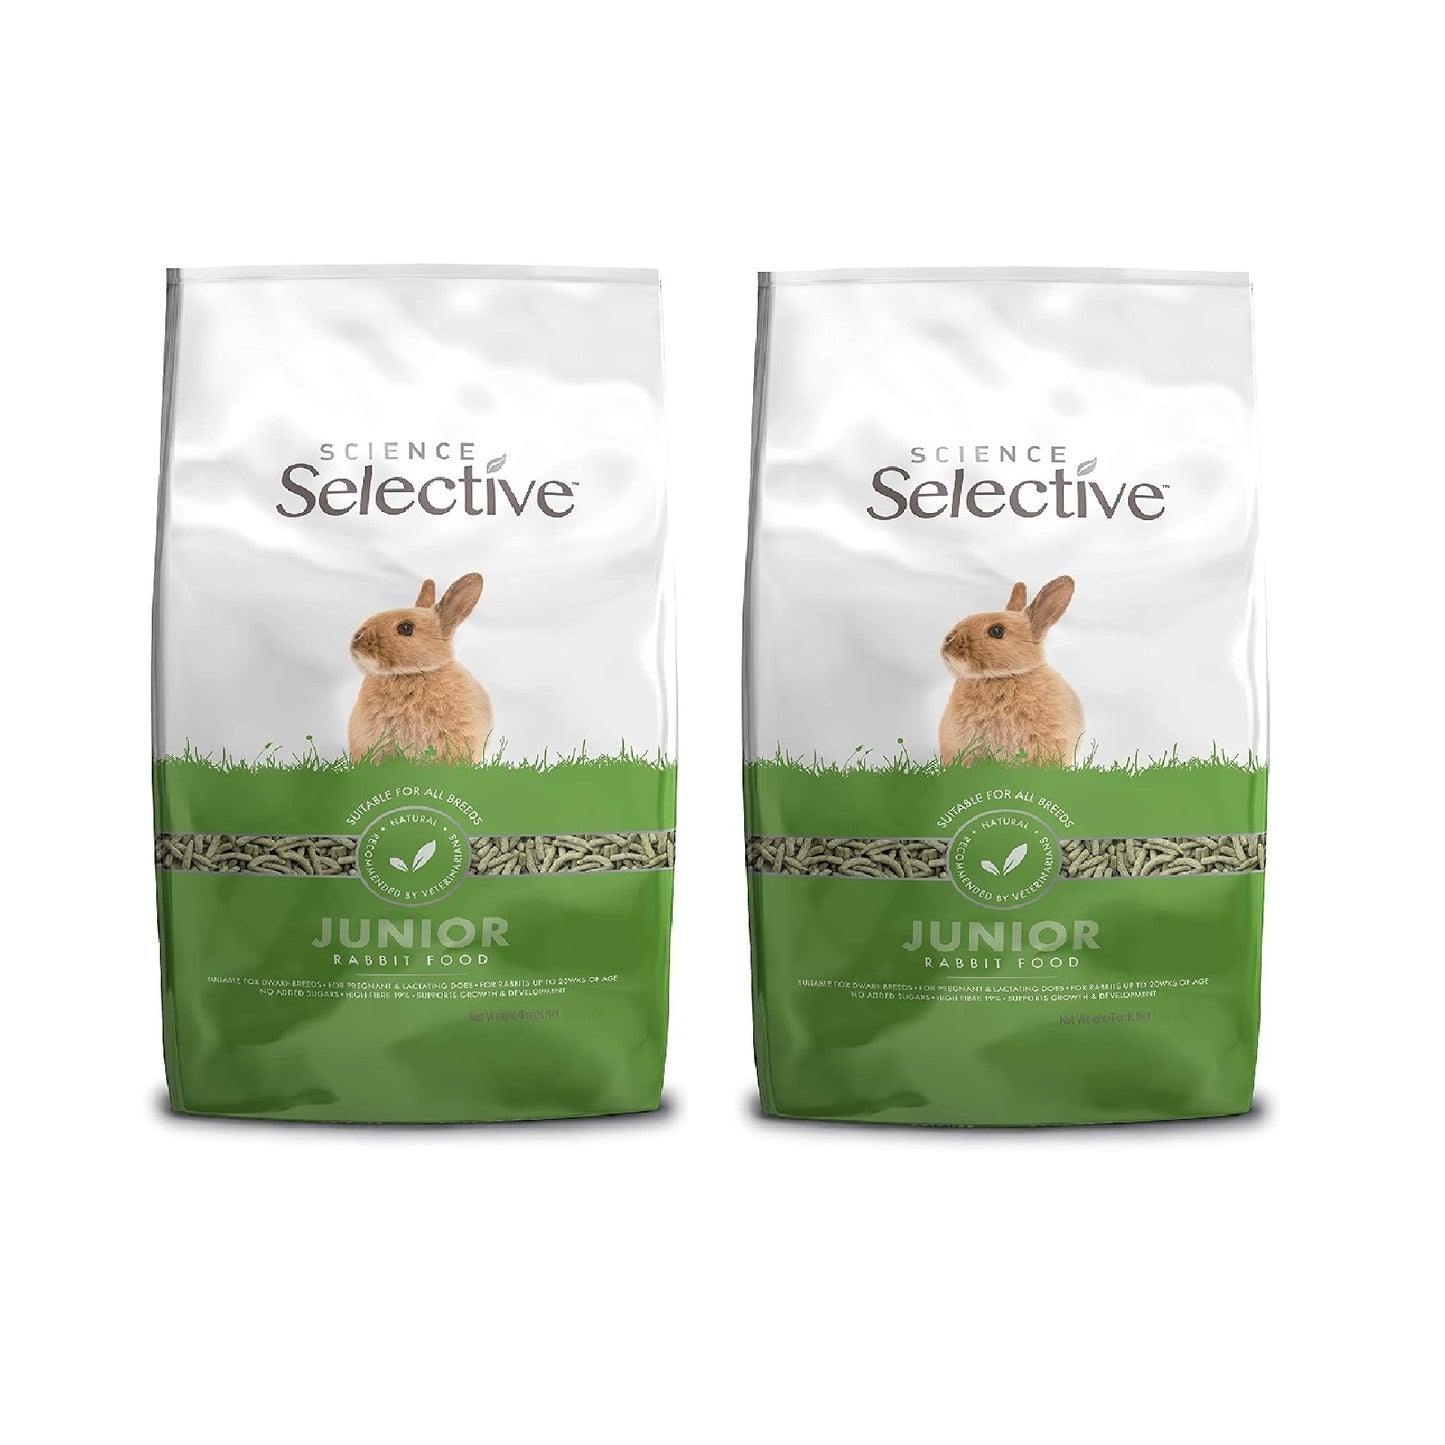 Science Selective - Junior Rabbit Food